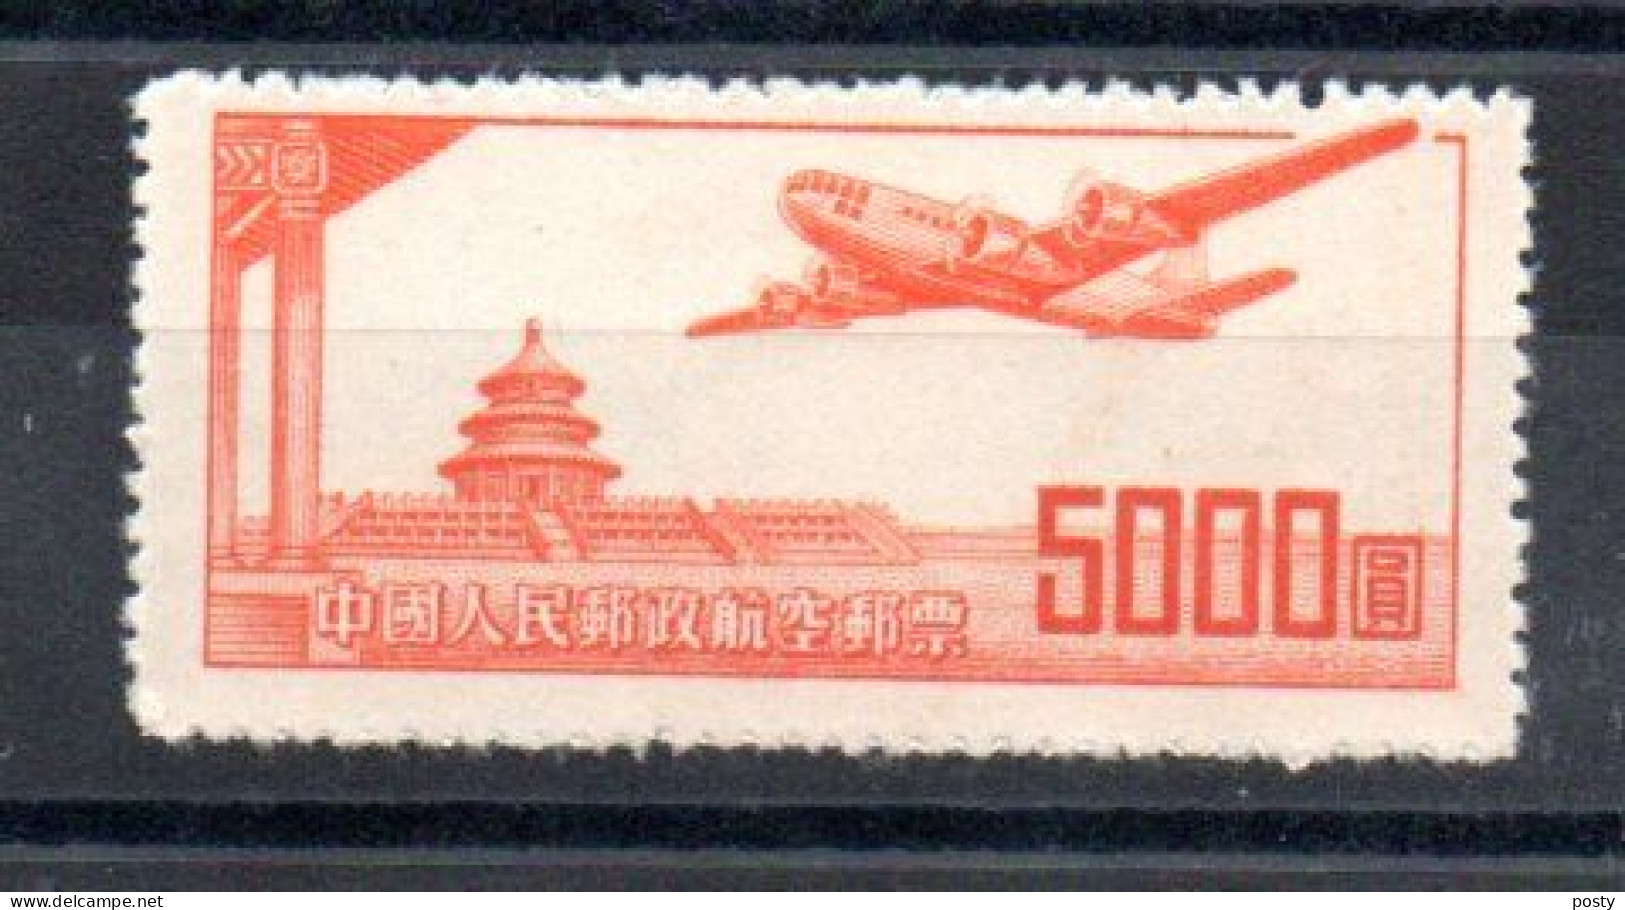 CHINE - CHINA - 1951 - POSTE AERIENNE - AIRMAIL - AVION - AIRCRAFT - TEMPLE DU CIEL - TEMPLE OF HEAVEN - 5000 - - Posta Aerea